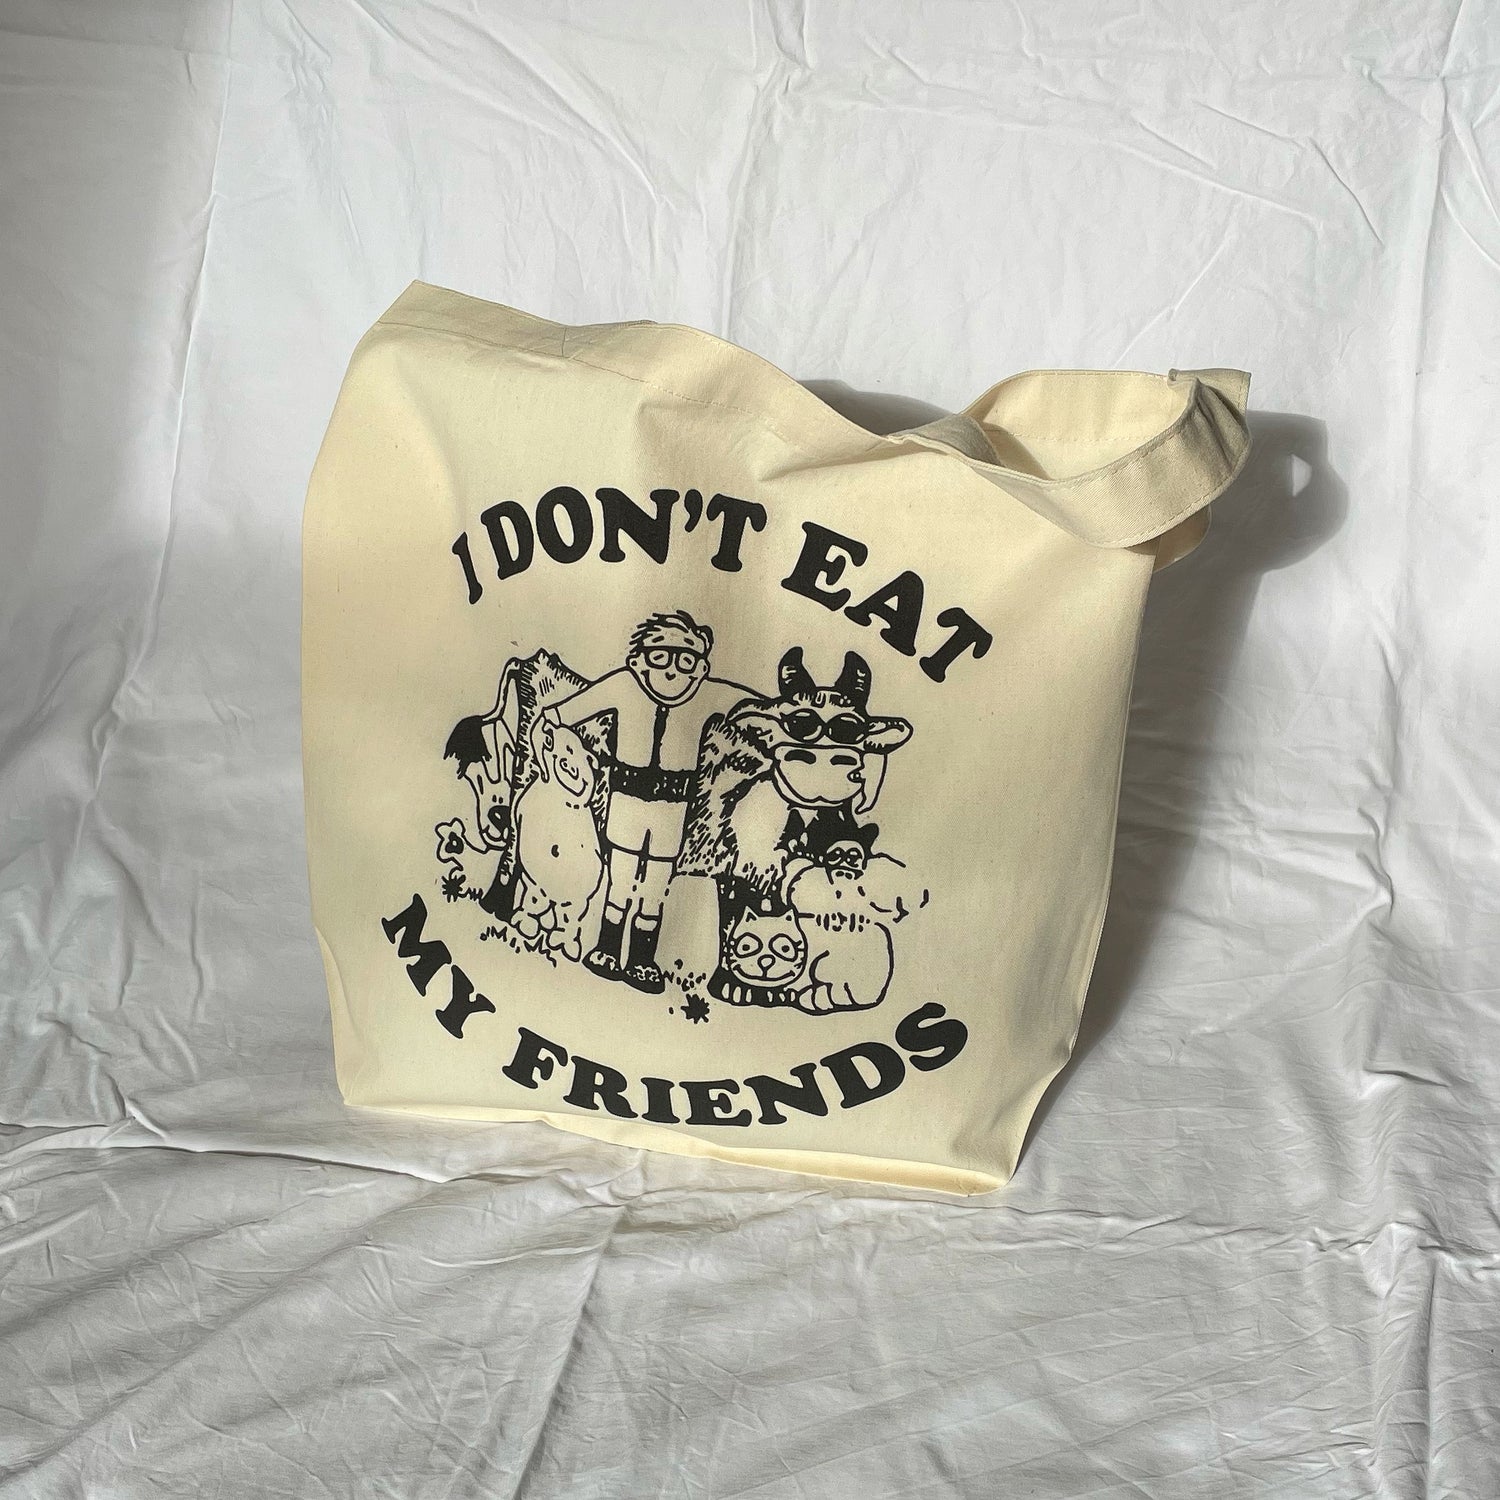 I Don't Eat My Friends Tote Bag BST Bag shopbst bstlovesyou instagram Pinterest quote 